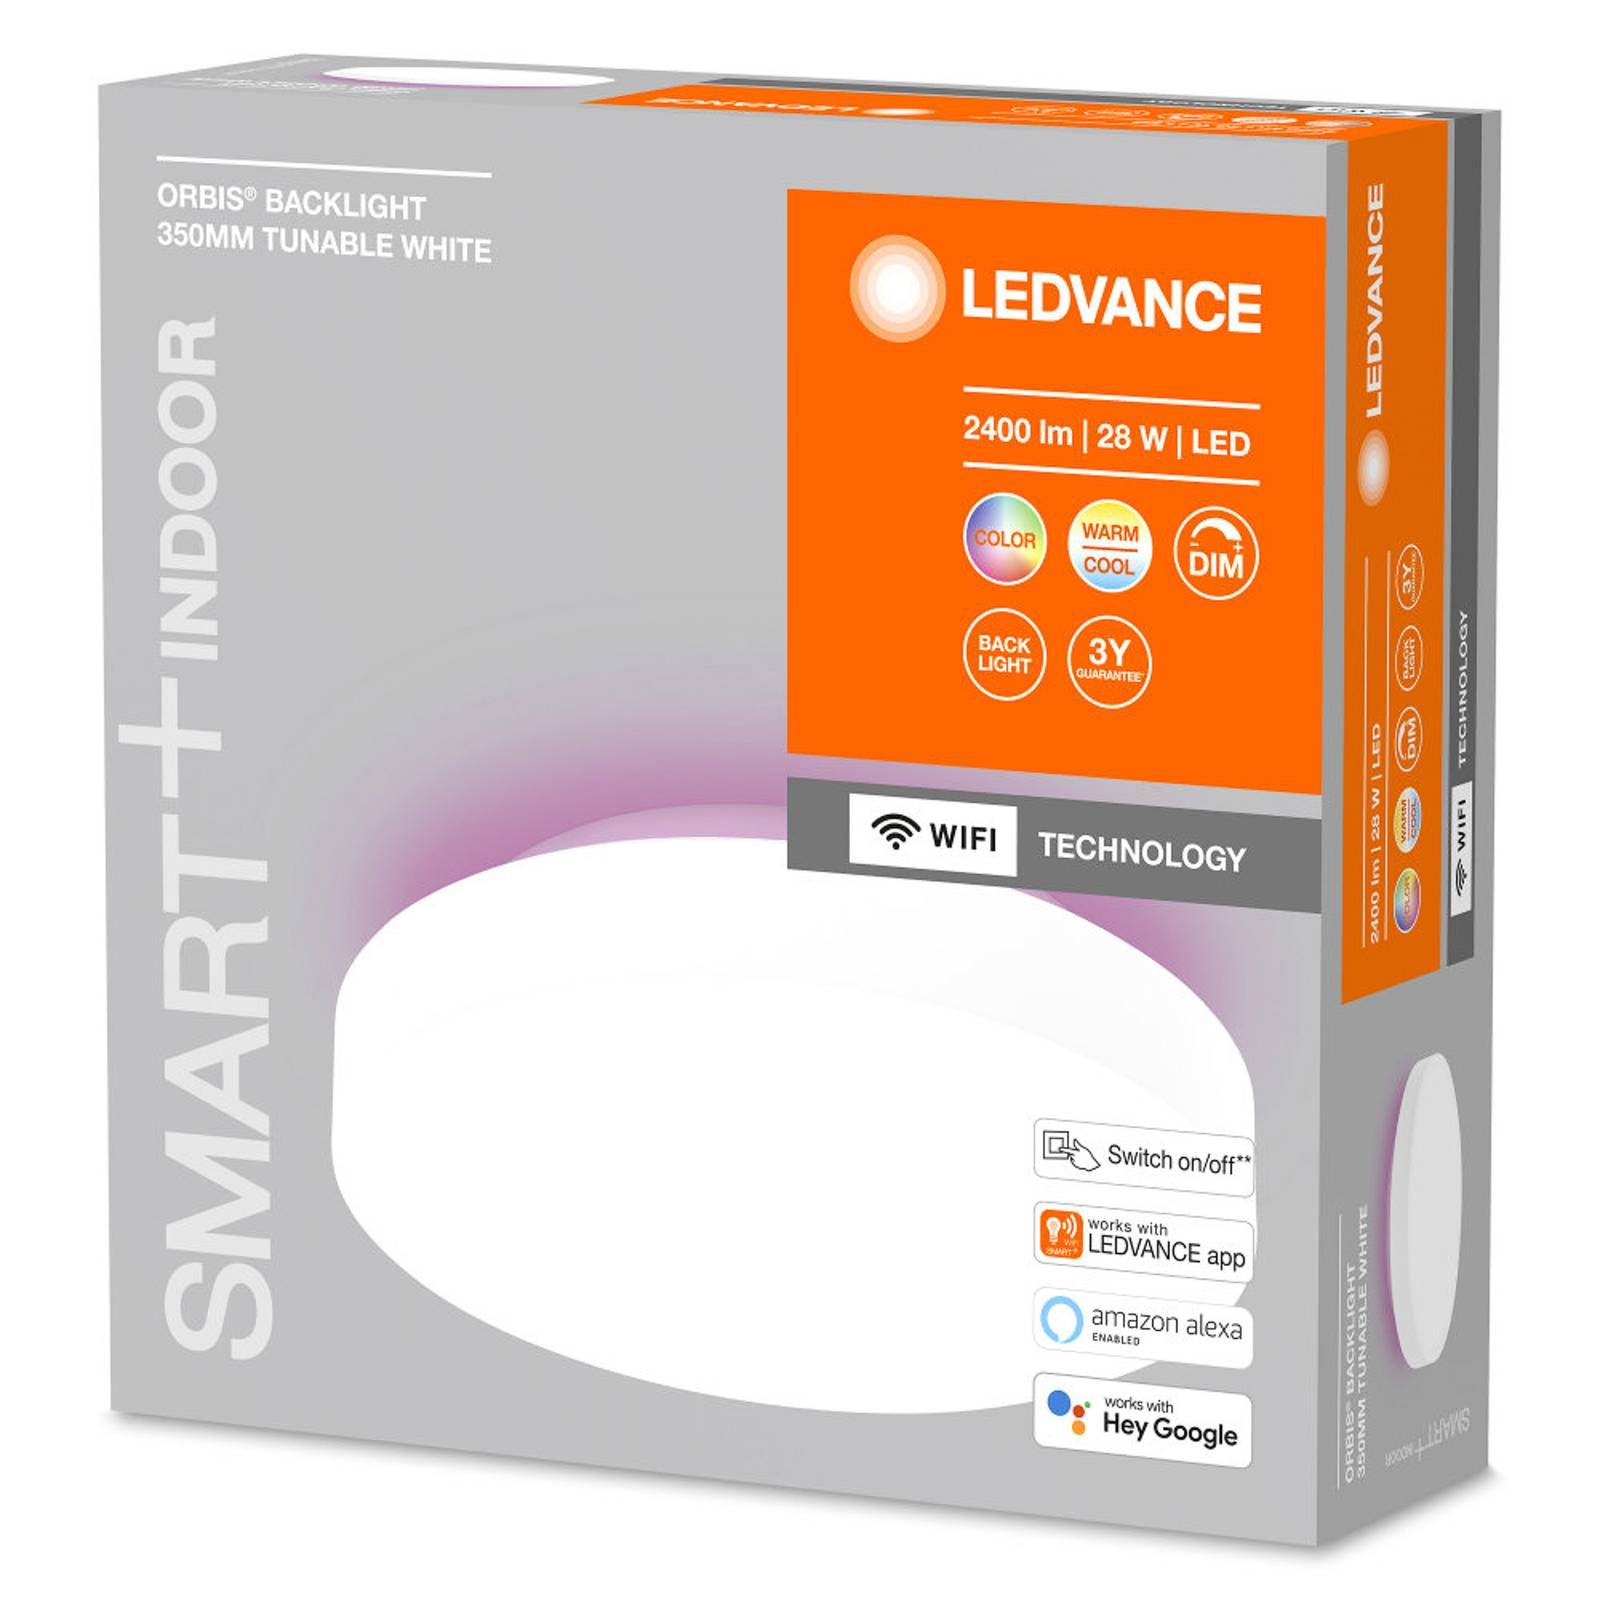 LEDVANCE SMART+ WiFi Orbis Backlight biela Ø 35 cm, Chodba, oceľ, polykarbonát, 28W, K: 9cm